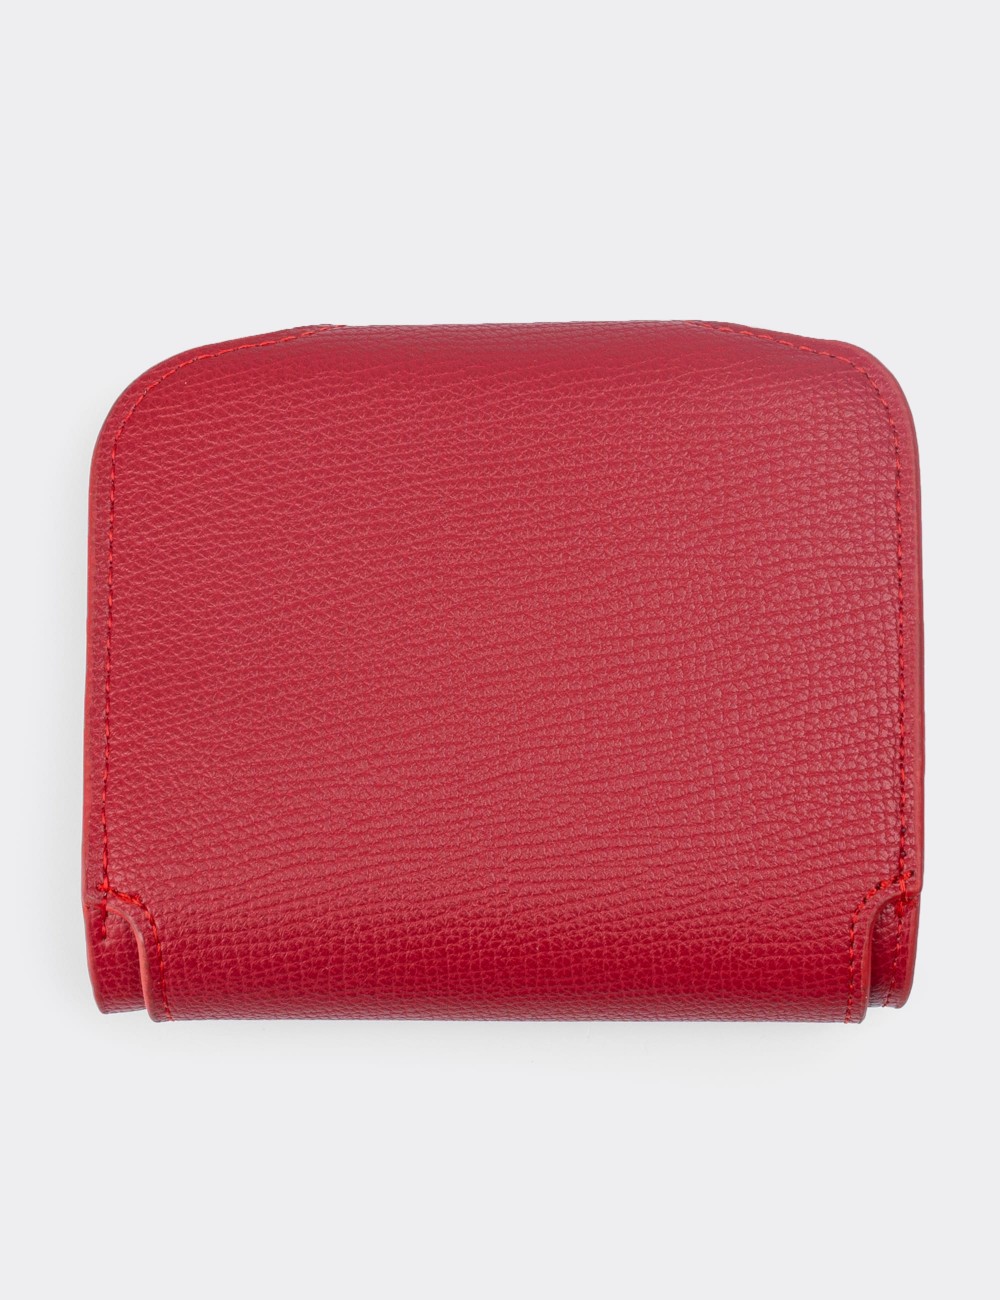 Red Women's Wallet - M3193ZKRMZ01